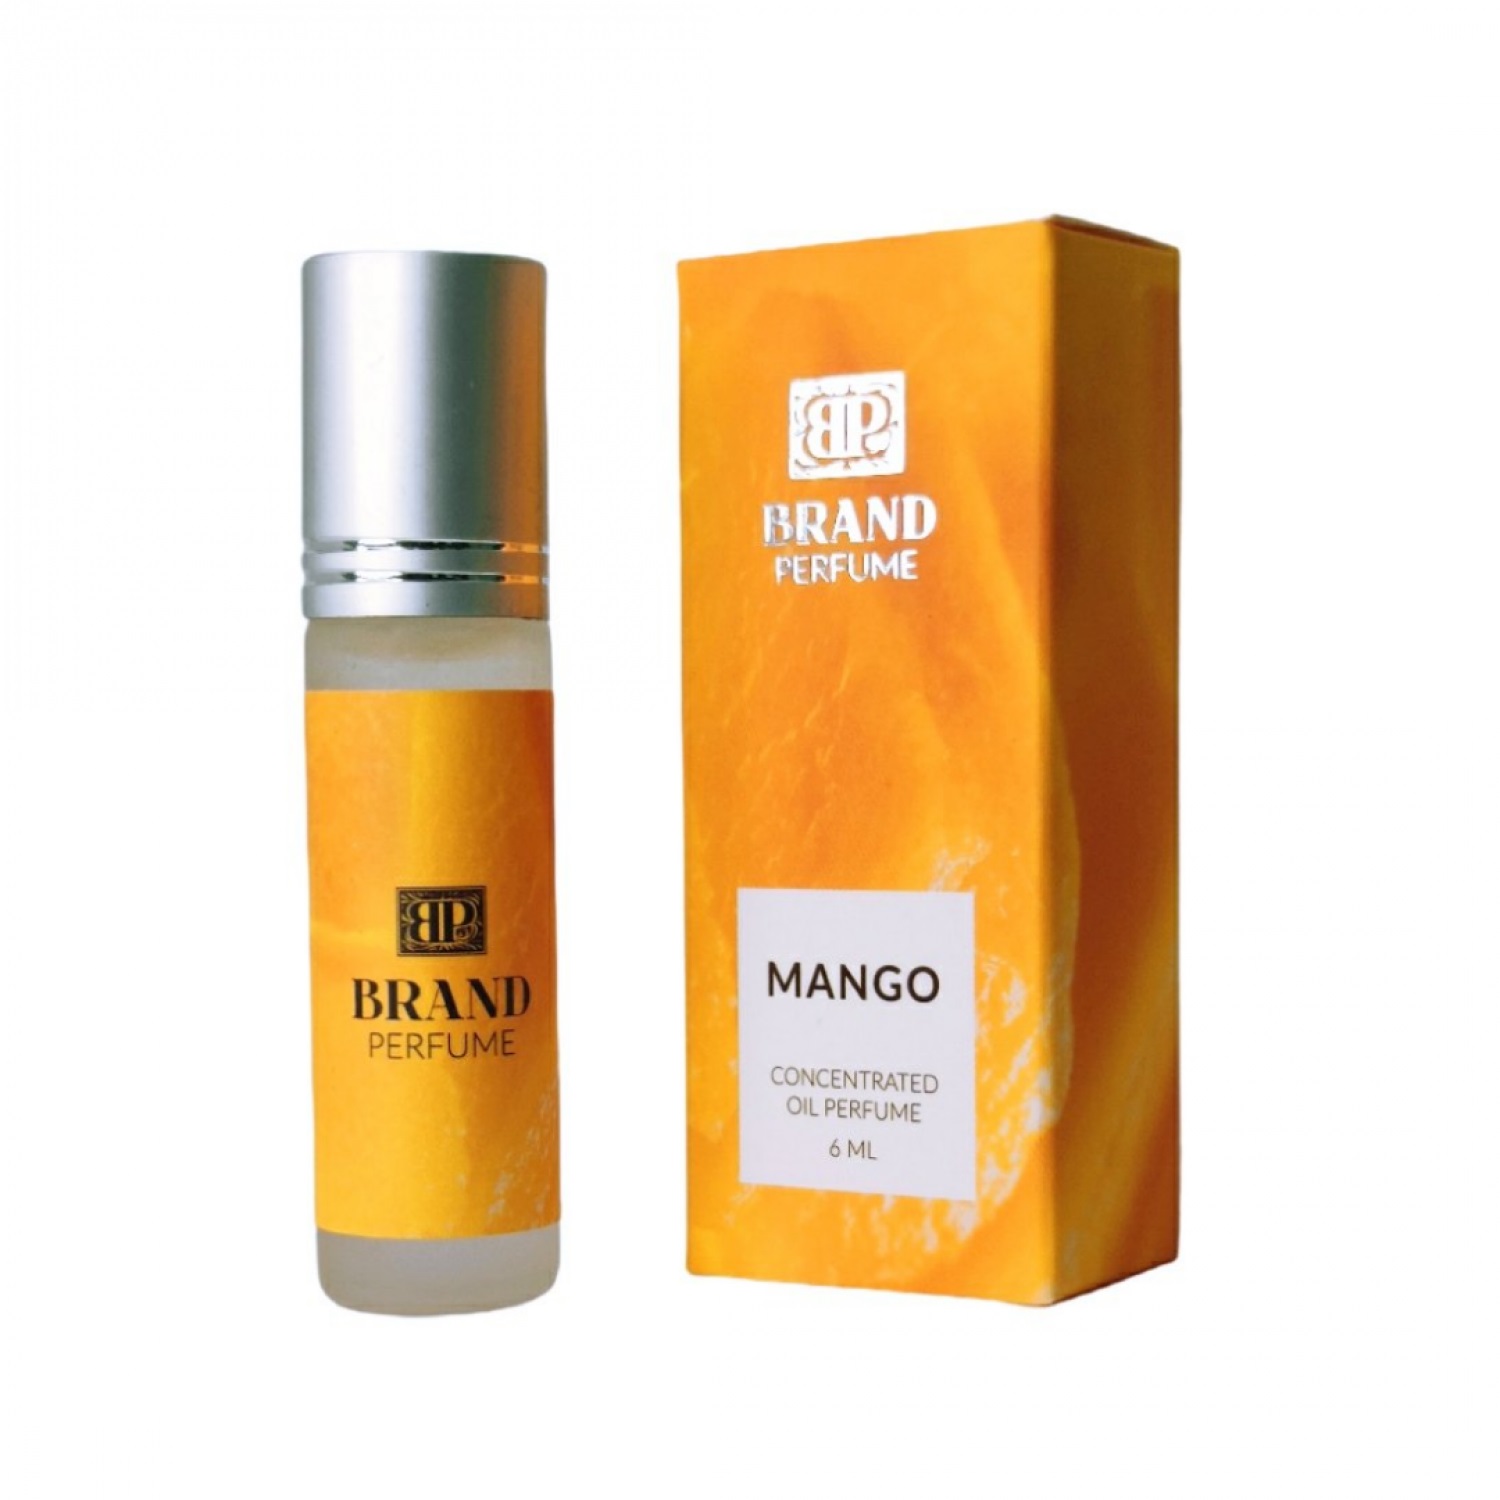 MANGO Concentrated Oil Perfume, Brand Perfume (Концентрированные масляные духи), ролик, 6 мл.